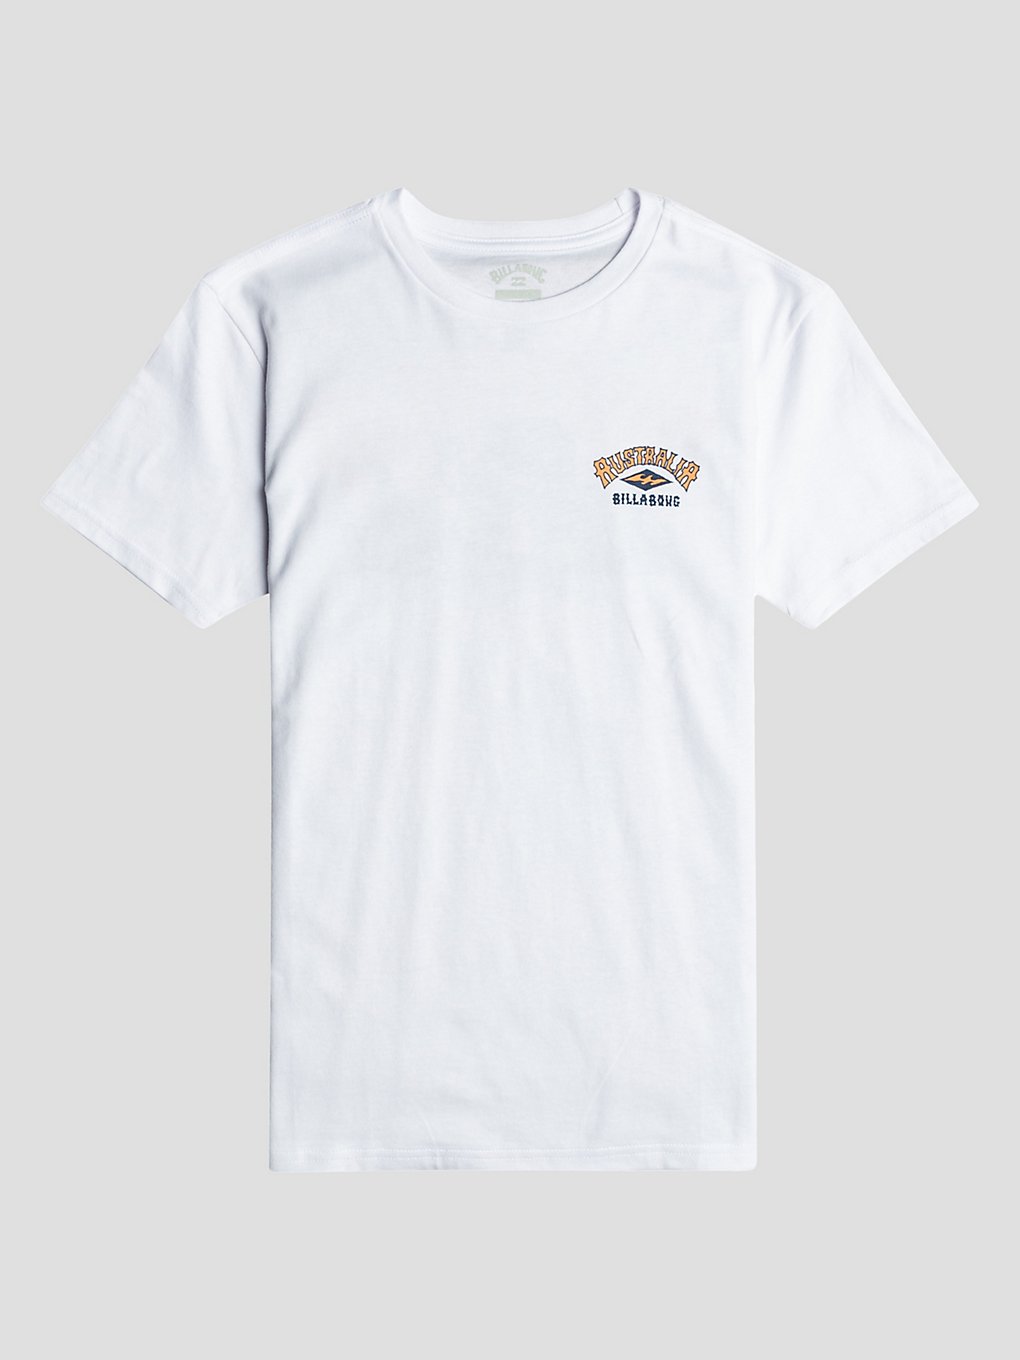 Billabong Arch Dreamy Place T-Shirt white kaufen